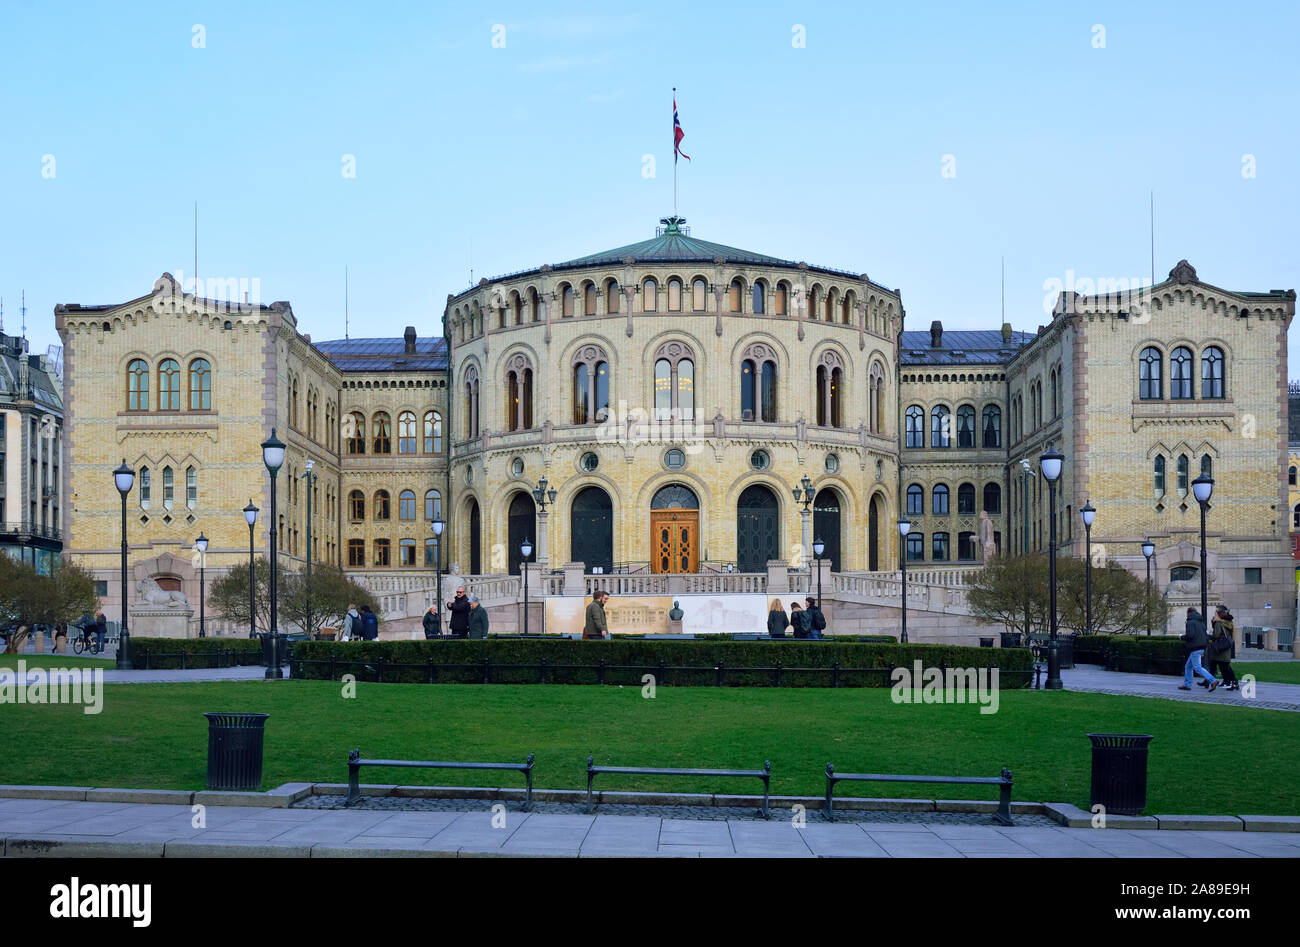 The Parliament (Stortinget). Oslo, Norway Stock Photo